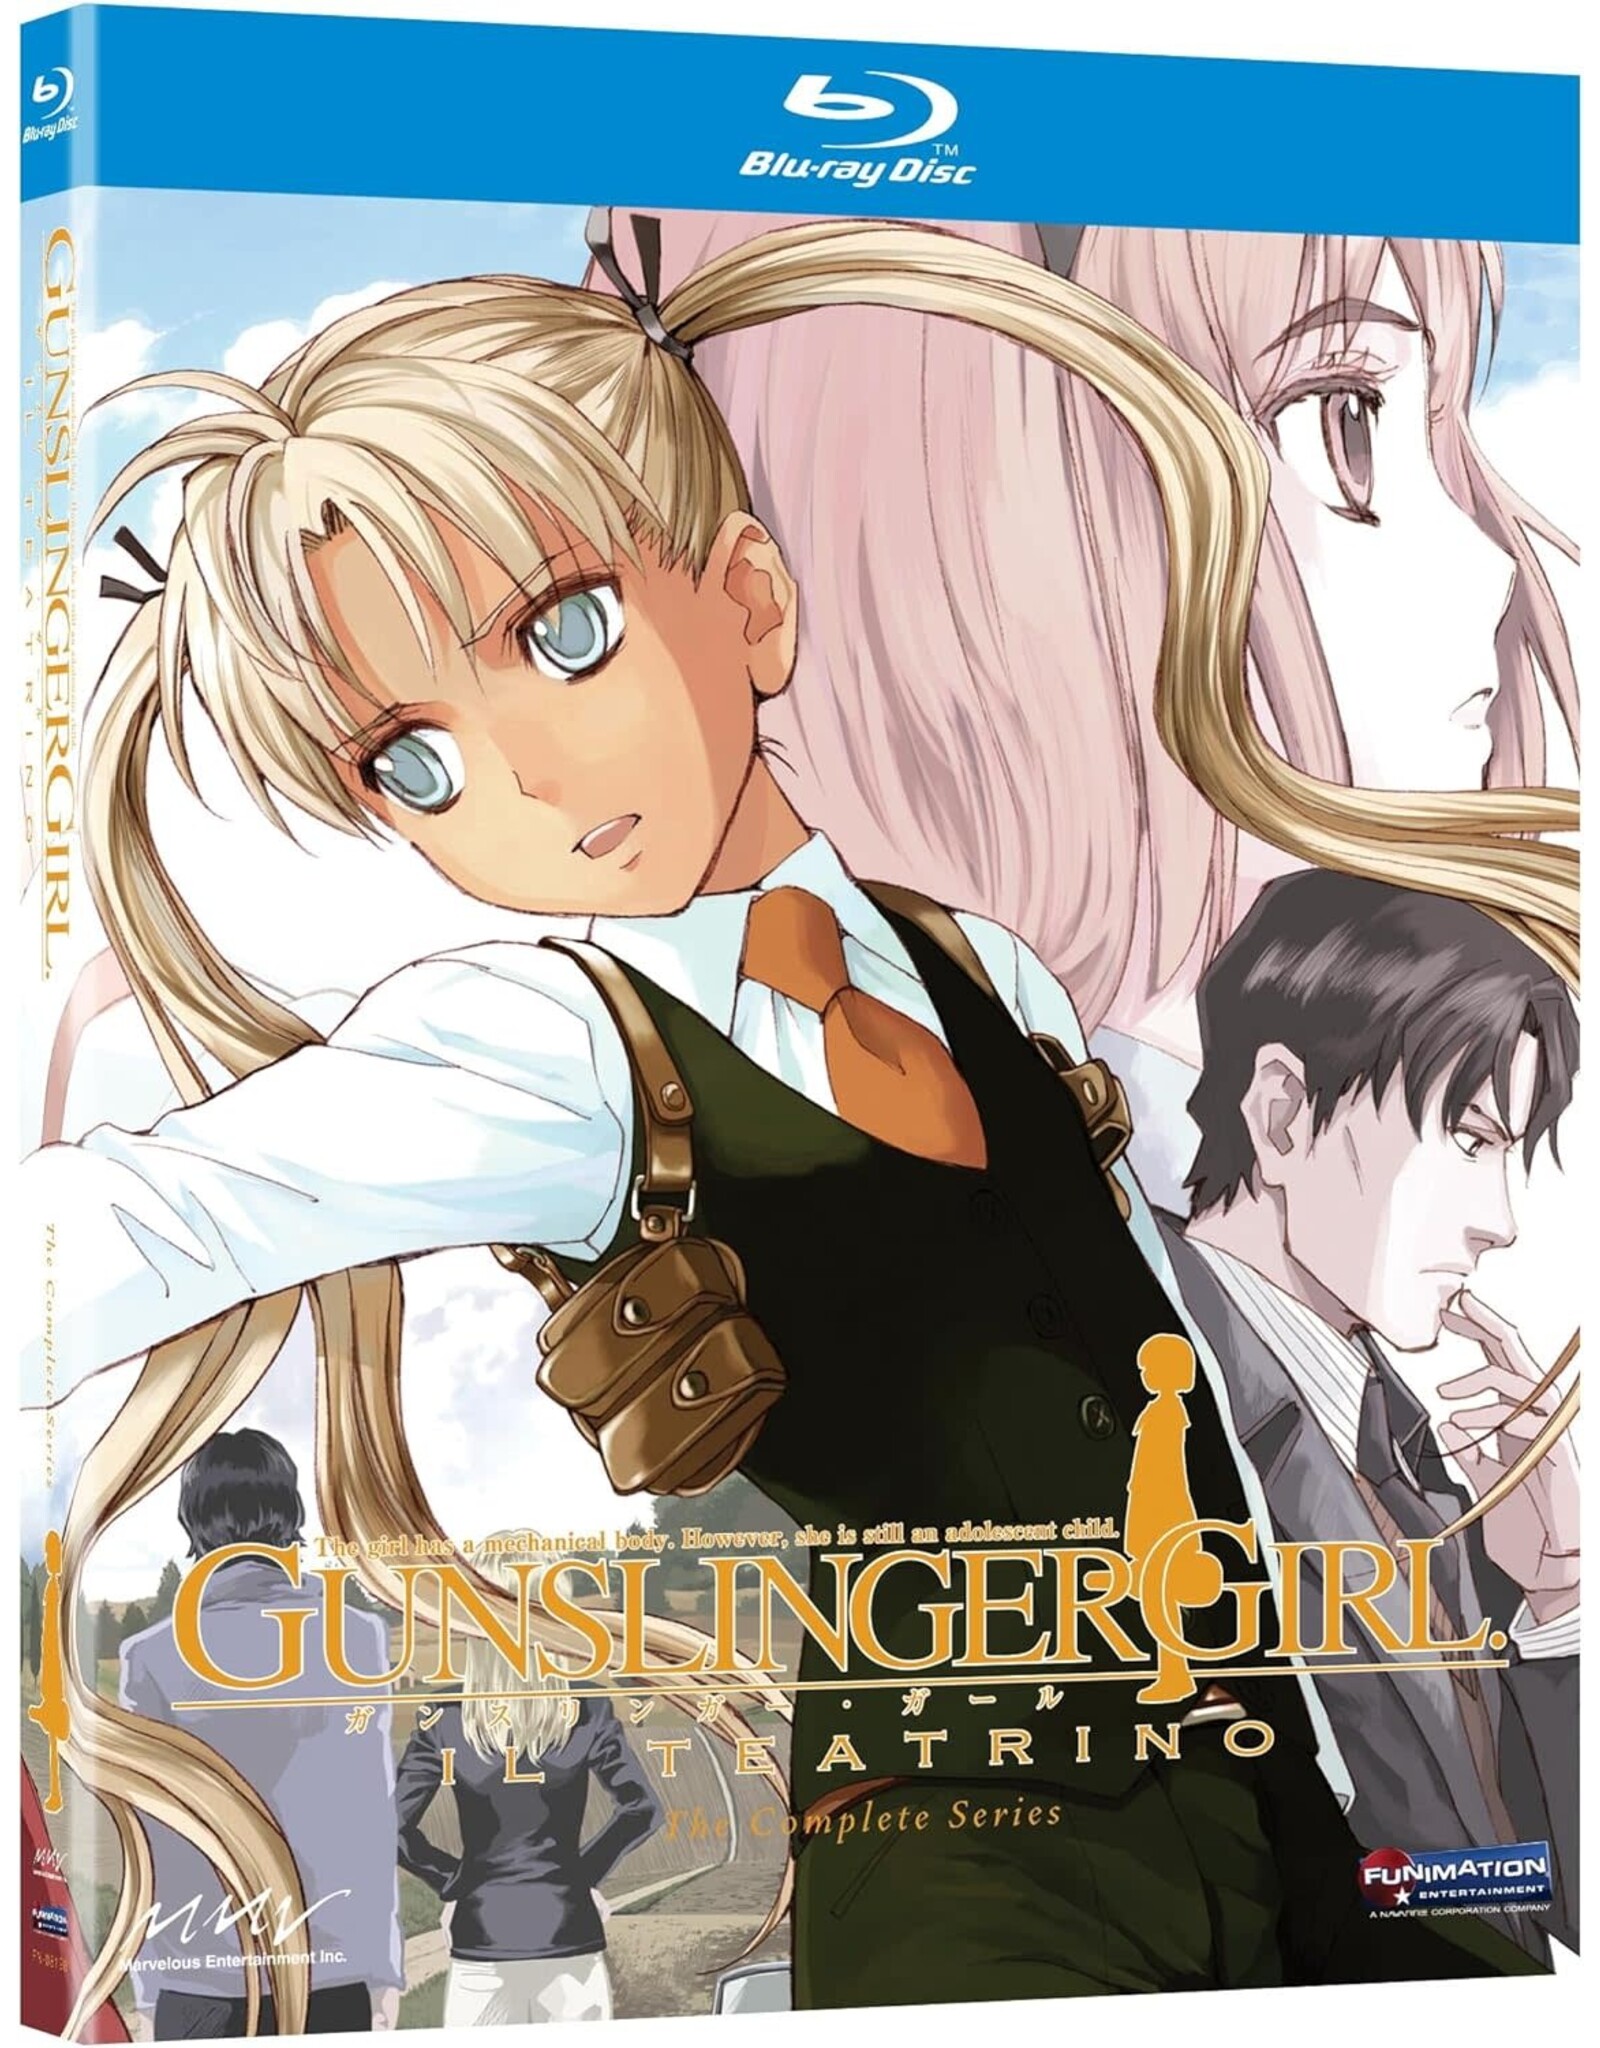 Anime & Animation Gunslinger Girl Il Teatrino The Complete Series (Used, No Slipcover)